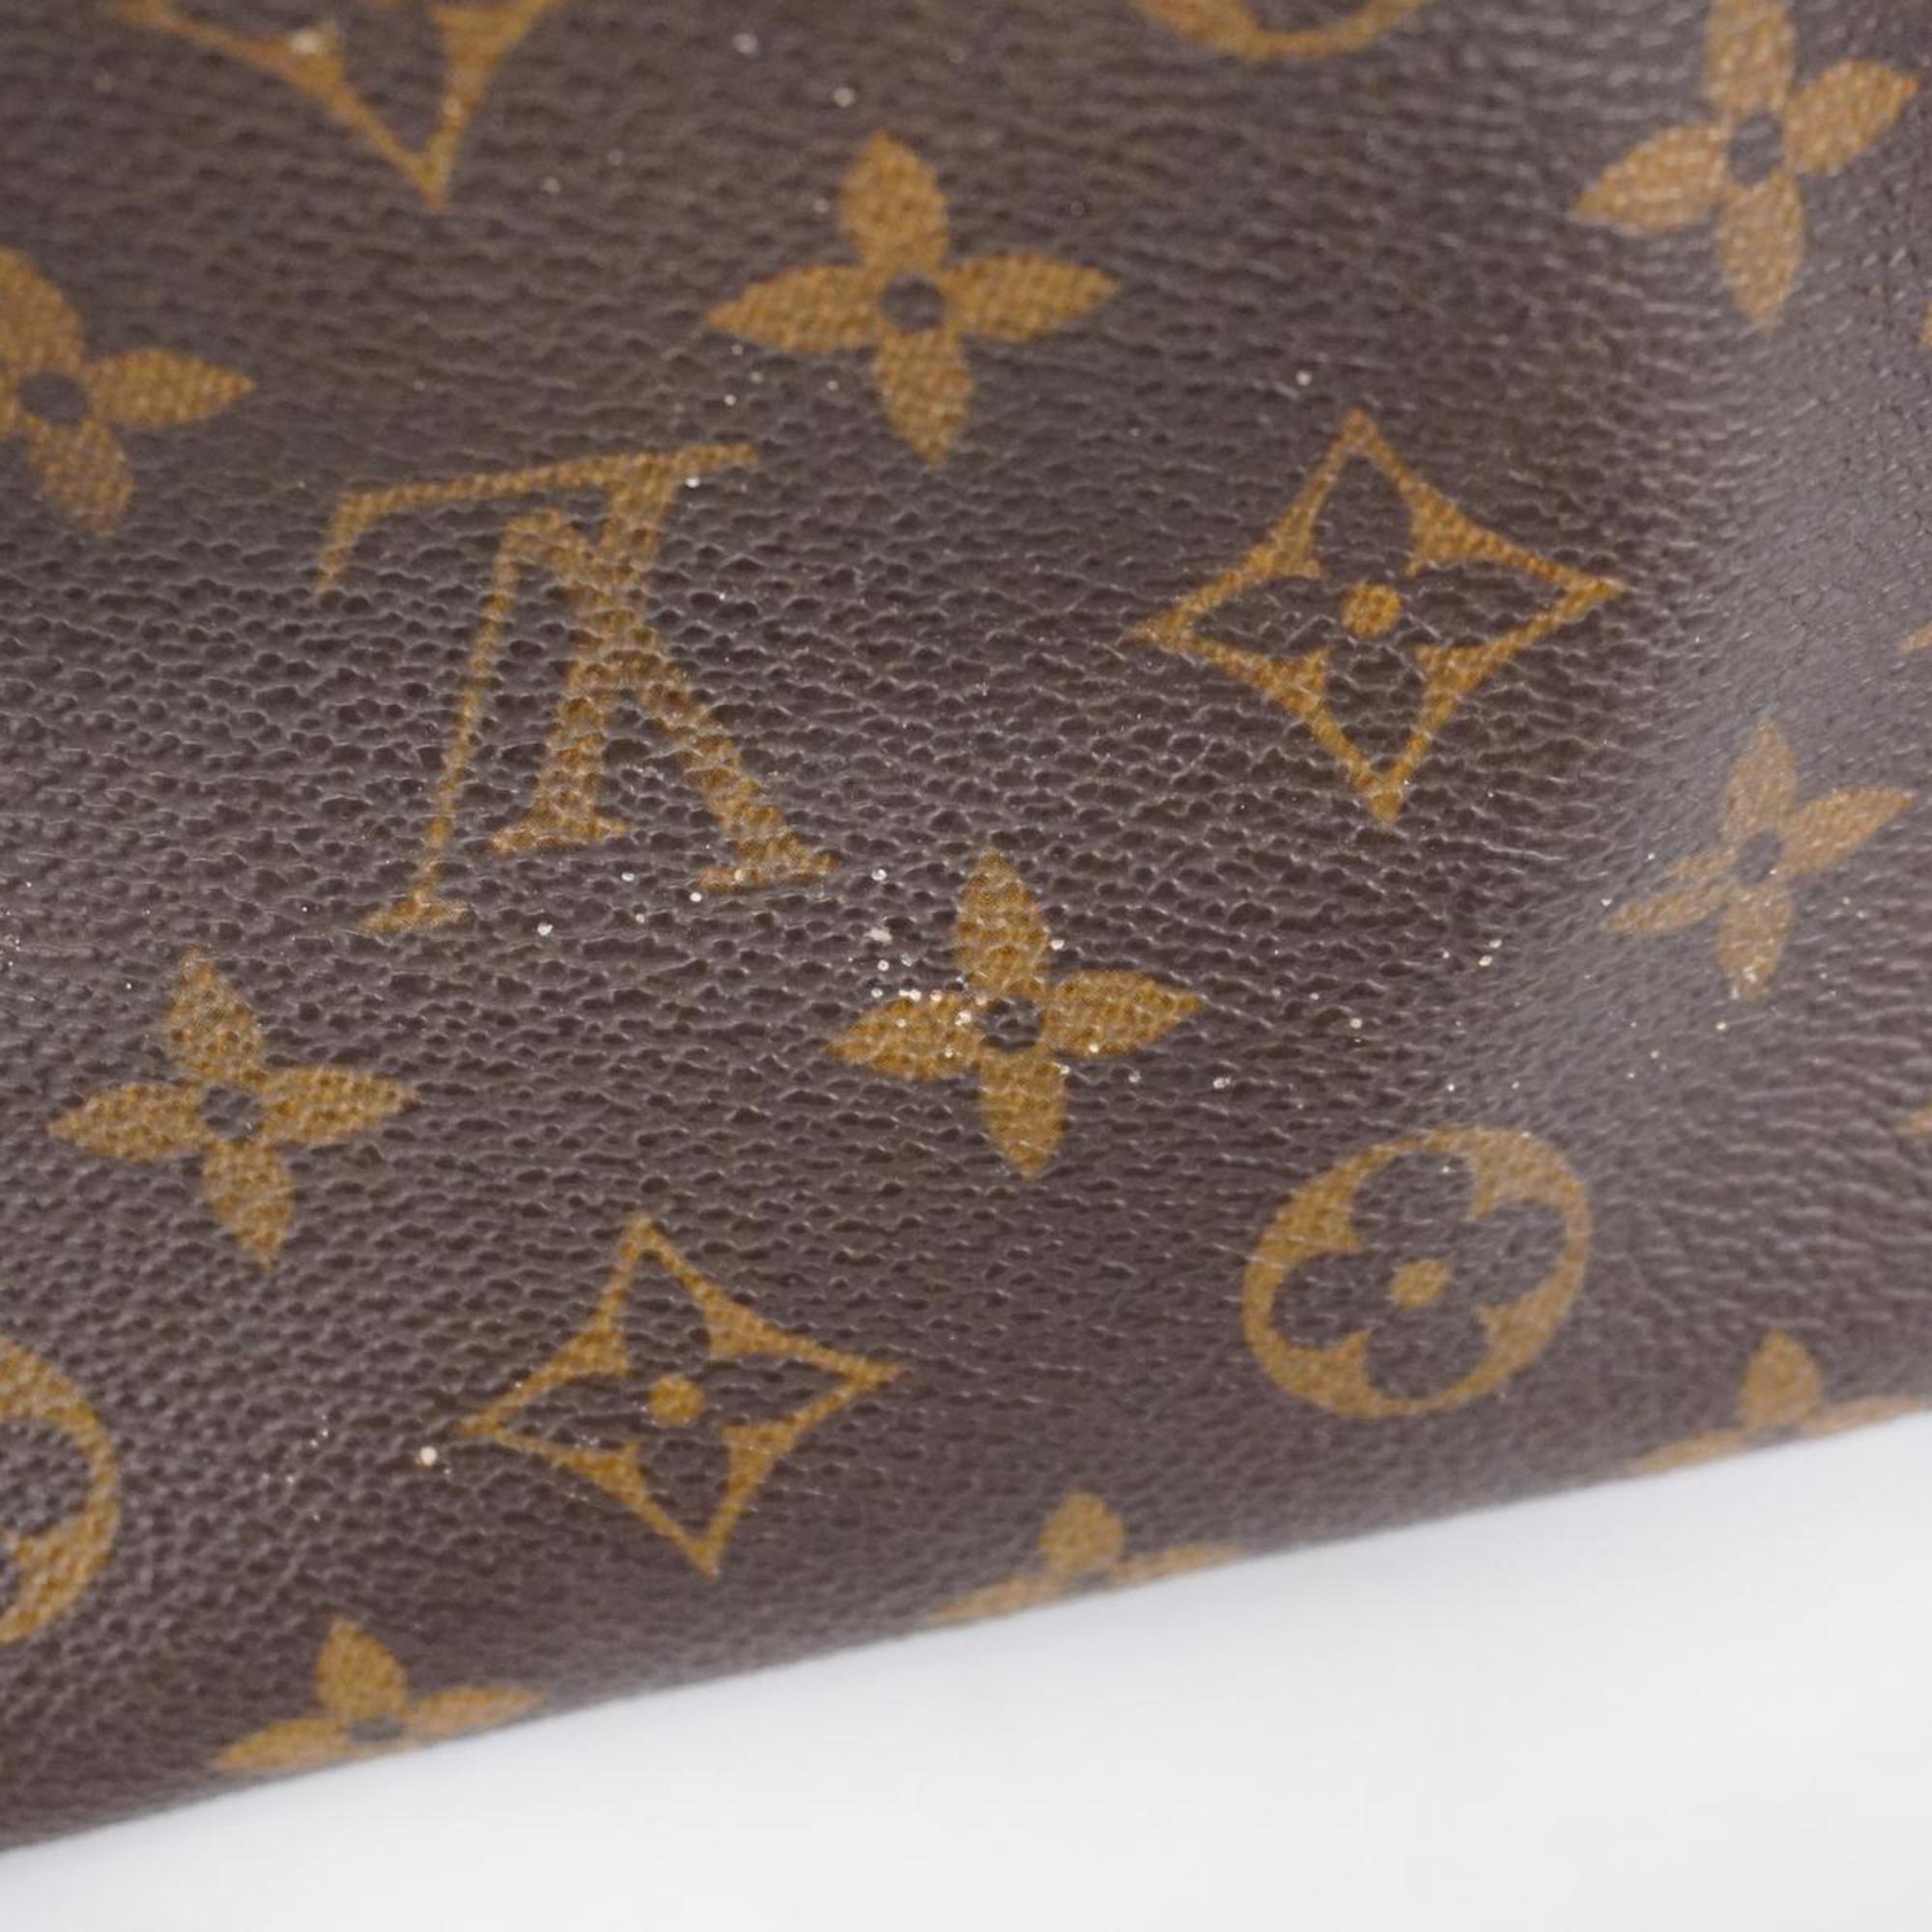 Louis Vuitton Handbag Monogram Speedy 25 M41109 Brown Ladies